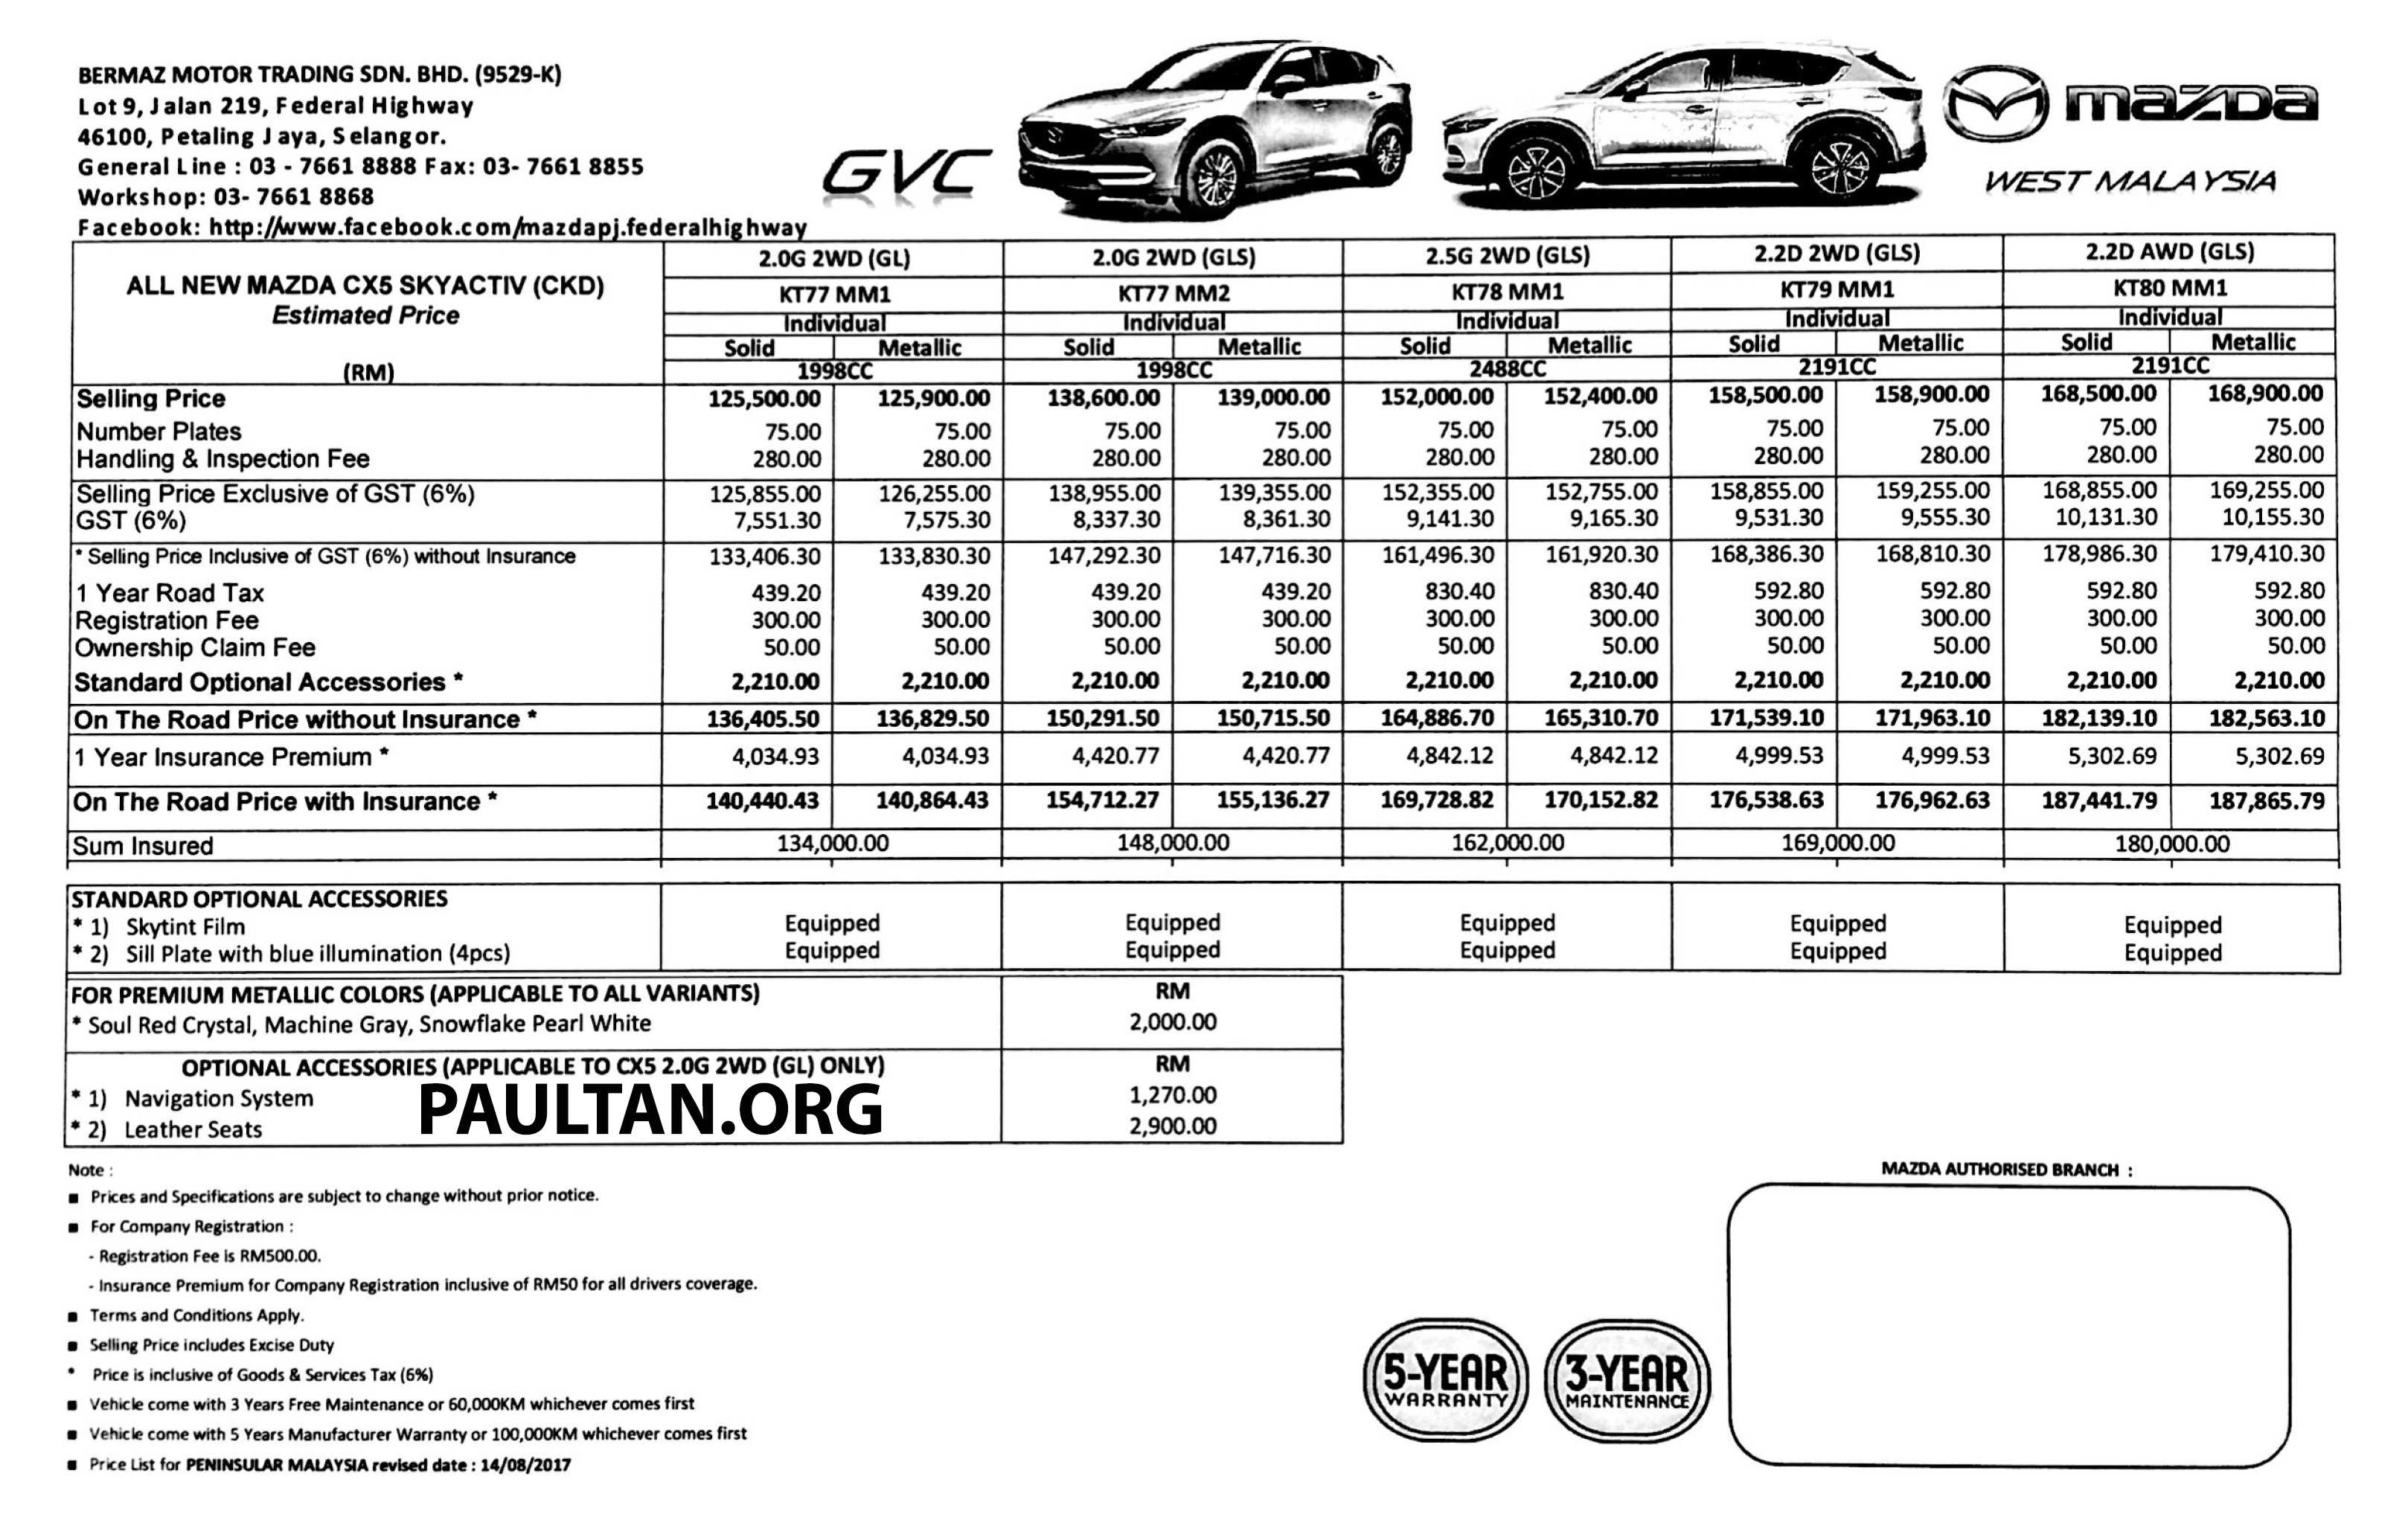 Технические характеристики Mazda CX-5 25 4x4 2013-2015 в автокаталоге CarExpertru Размеры и масса Mazda CX-5 25 4x4 2013-2015 Клиренс Mazda CX-5 Мощность двигателя Mazda CX-5 25 4x4 2013-2015 Расход топлива Mazda CX-5 25 4x4 2013-2015 Максимальная скорост